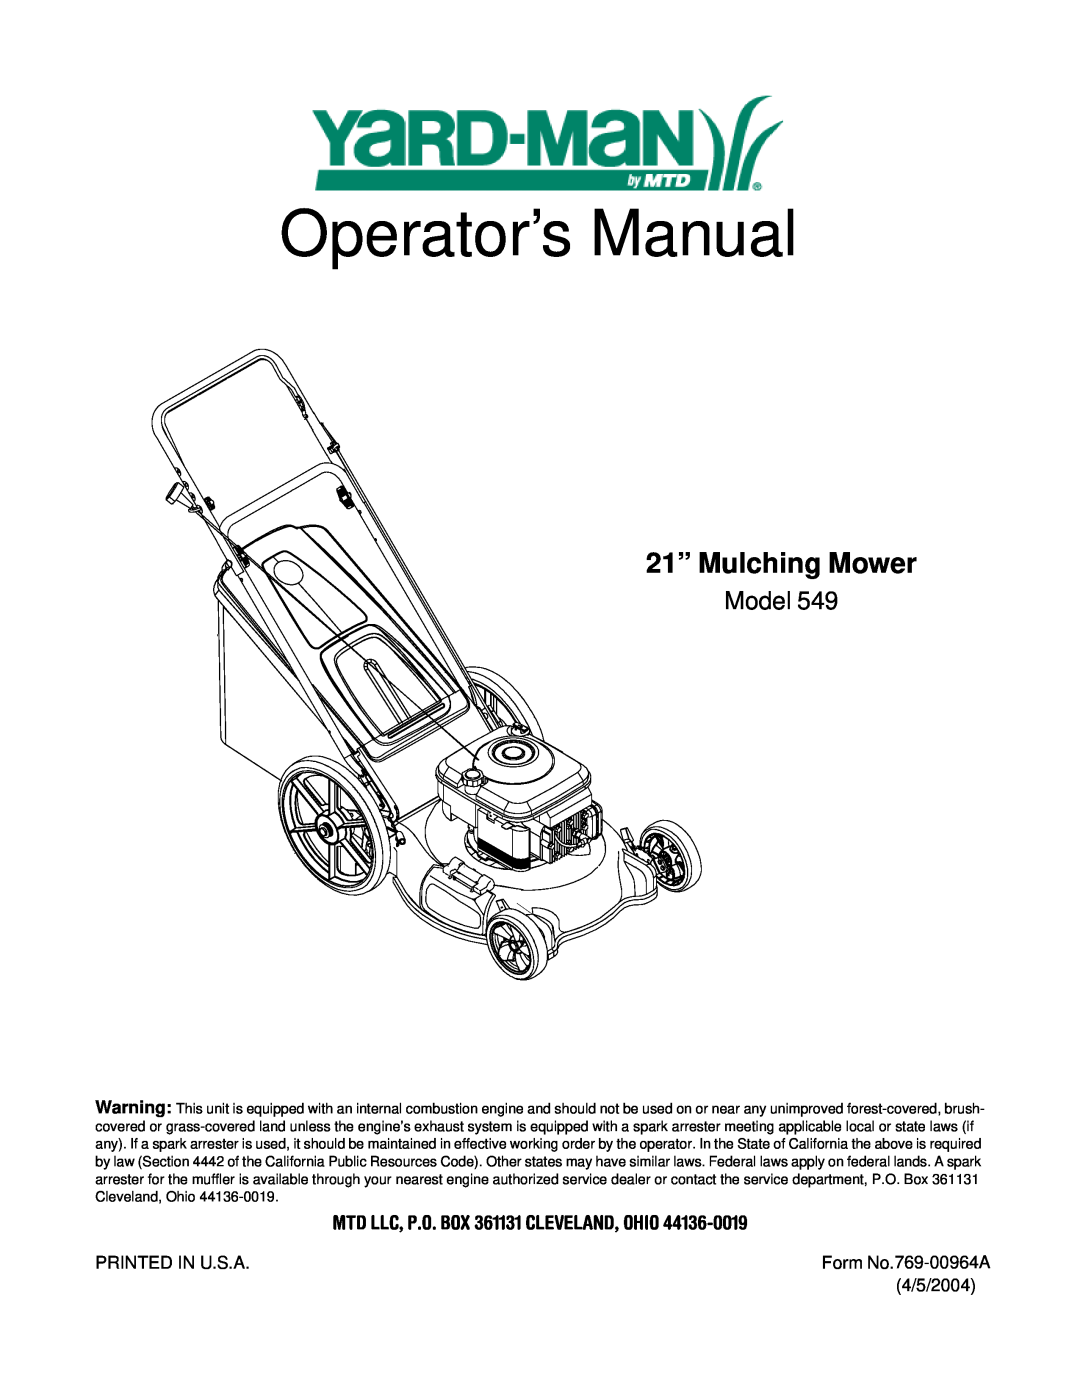 Yard-Man 549 manual MTD LLC, P.O. BOX 361131 CLEVELAND, OHIO, Operator’s Manual, 21” Mulching Mower, Model 